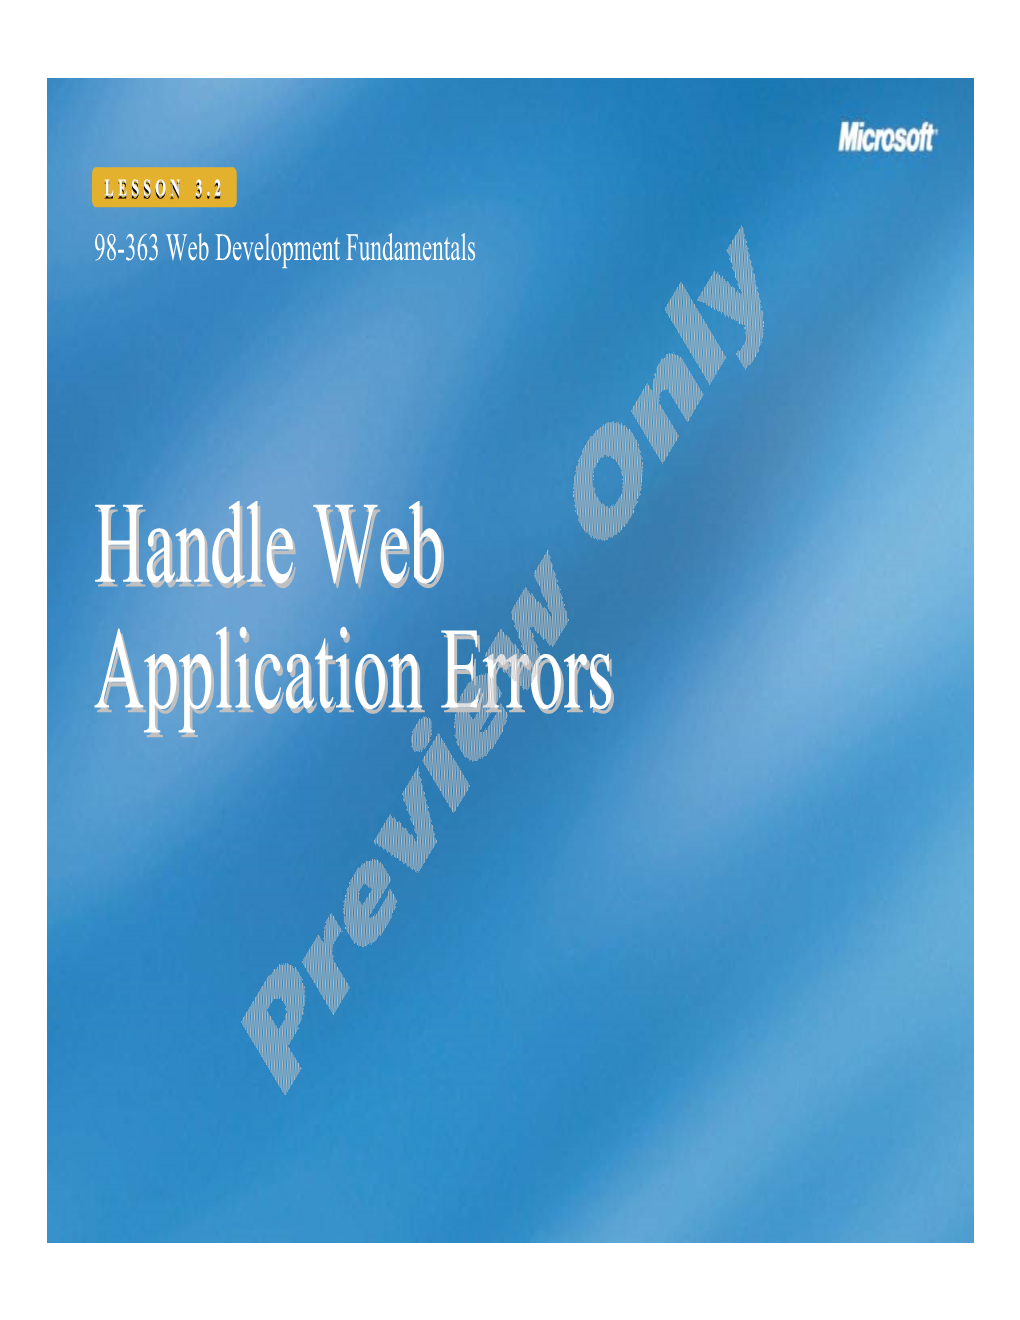 Handle Web Application Errors